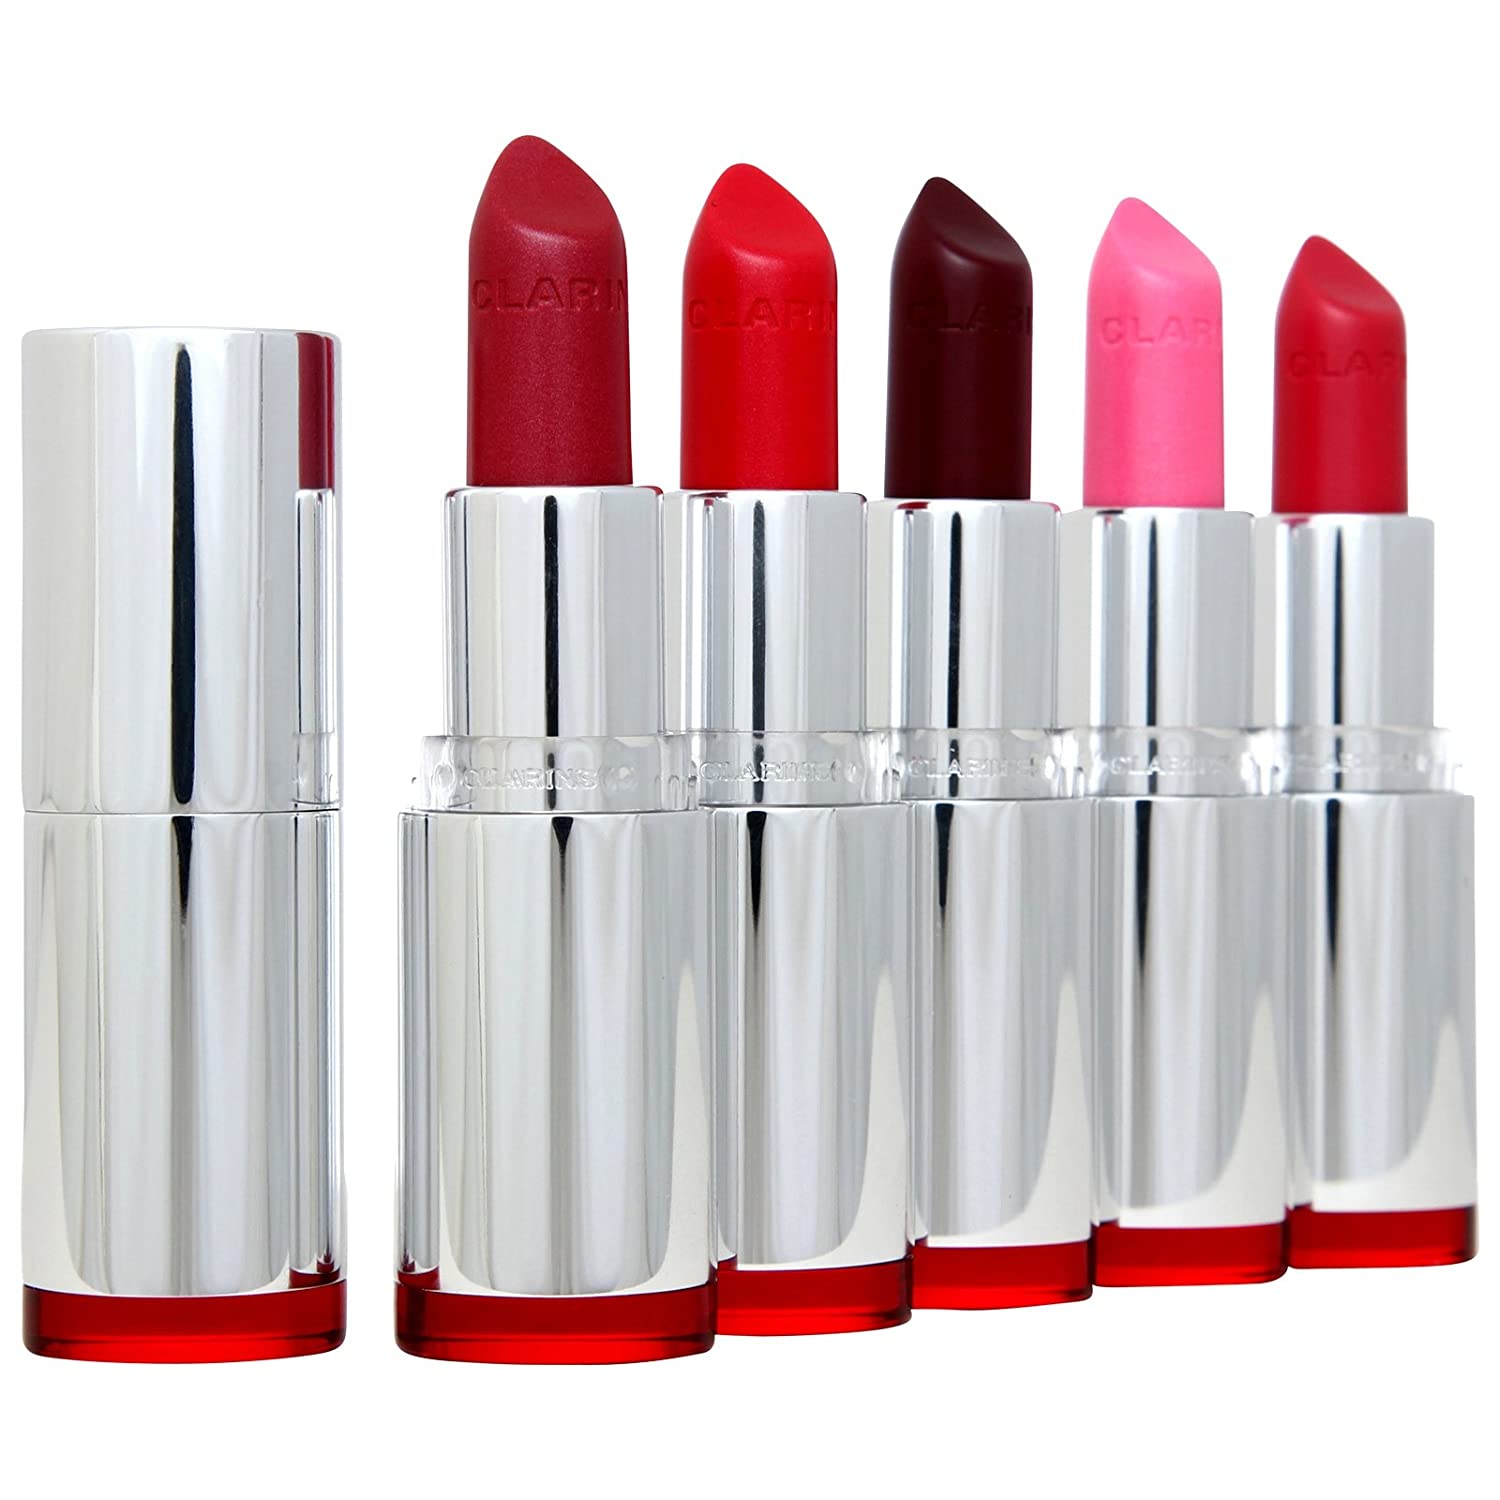 Clarins Joli Rouge (Long Wearing Moisturizing Lipstick) – # 705 Soft Berry 3.5g/0.12oz – Make Up